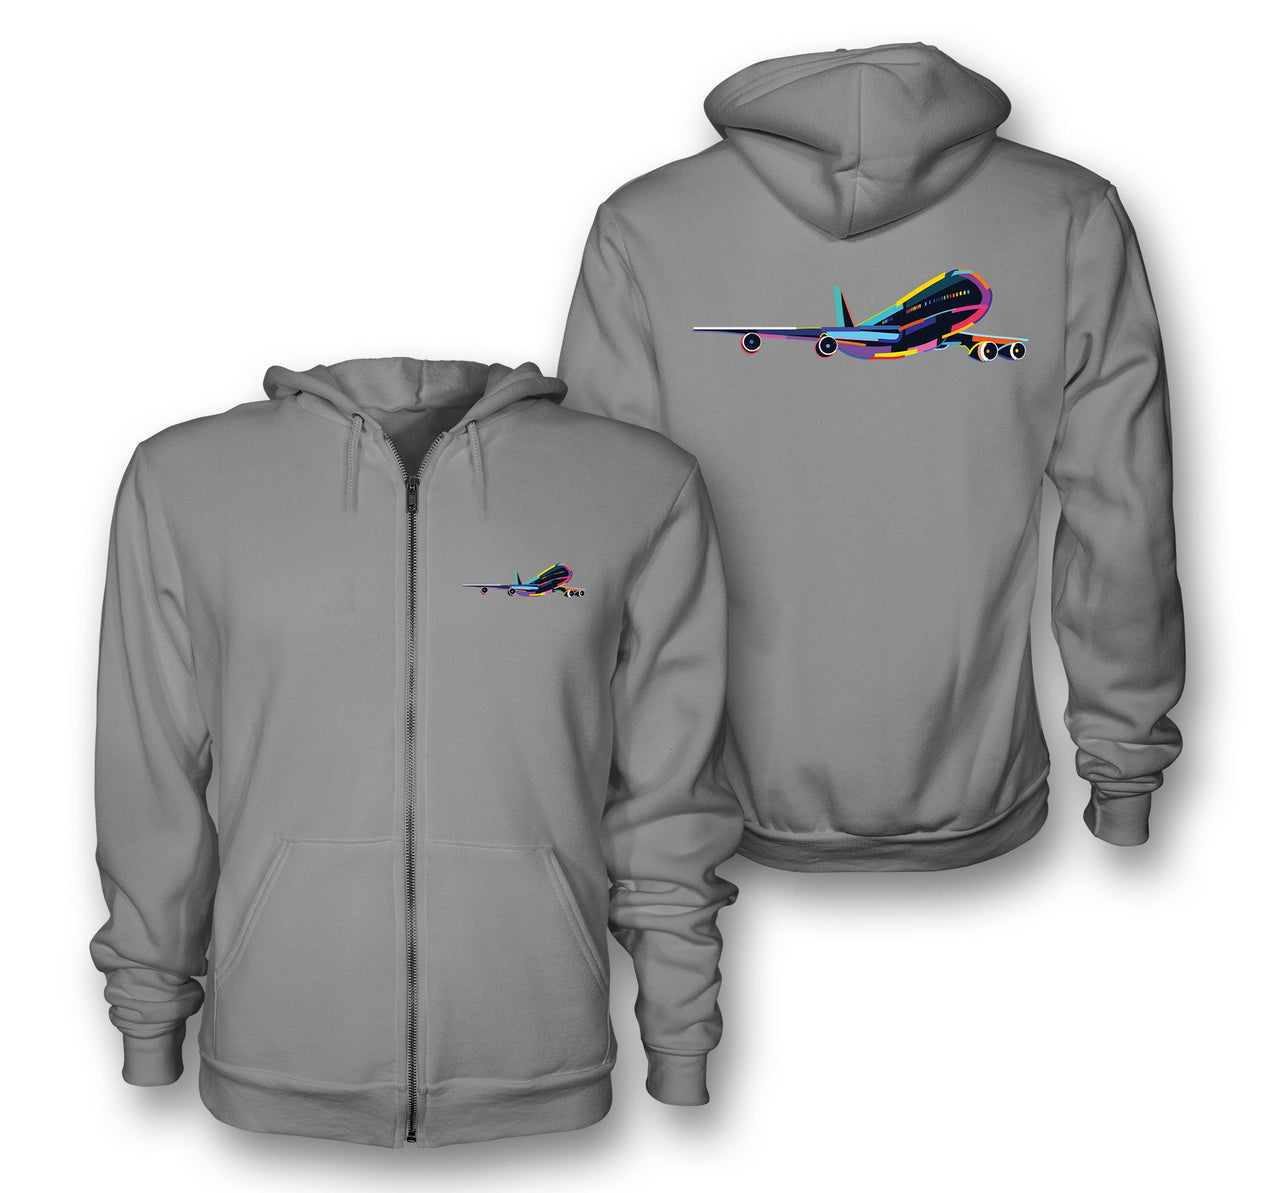 Multicolor Airplane Designed Zipped Hoodies